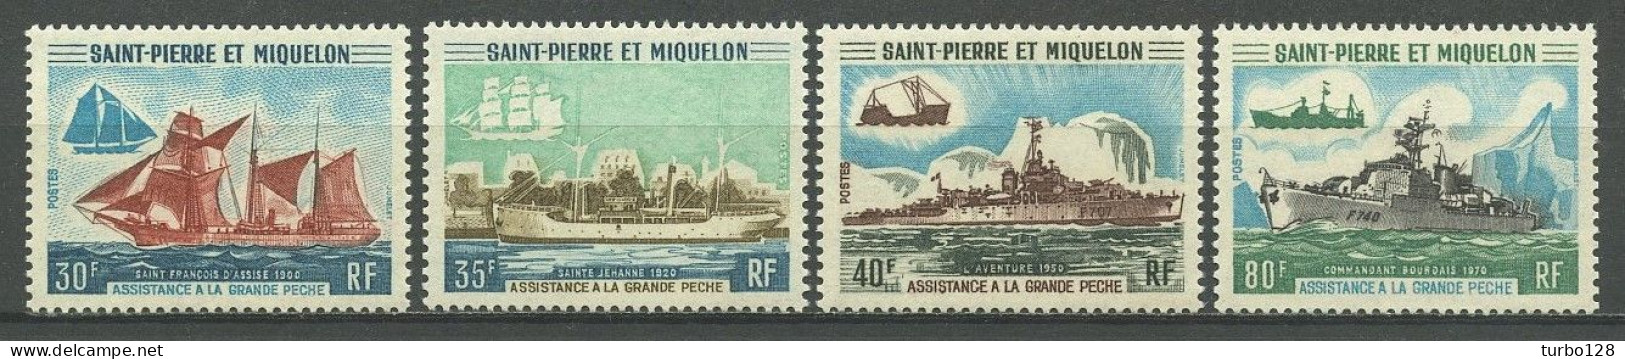 SPM MIQUELON 1971 N° 410/413 ** Neufs MNH Superbes C 235 € Bateaux Sailboat Ships Pêche Fishing Transports - Nuovi